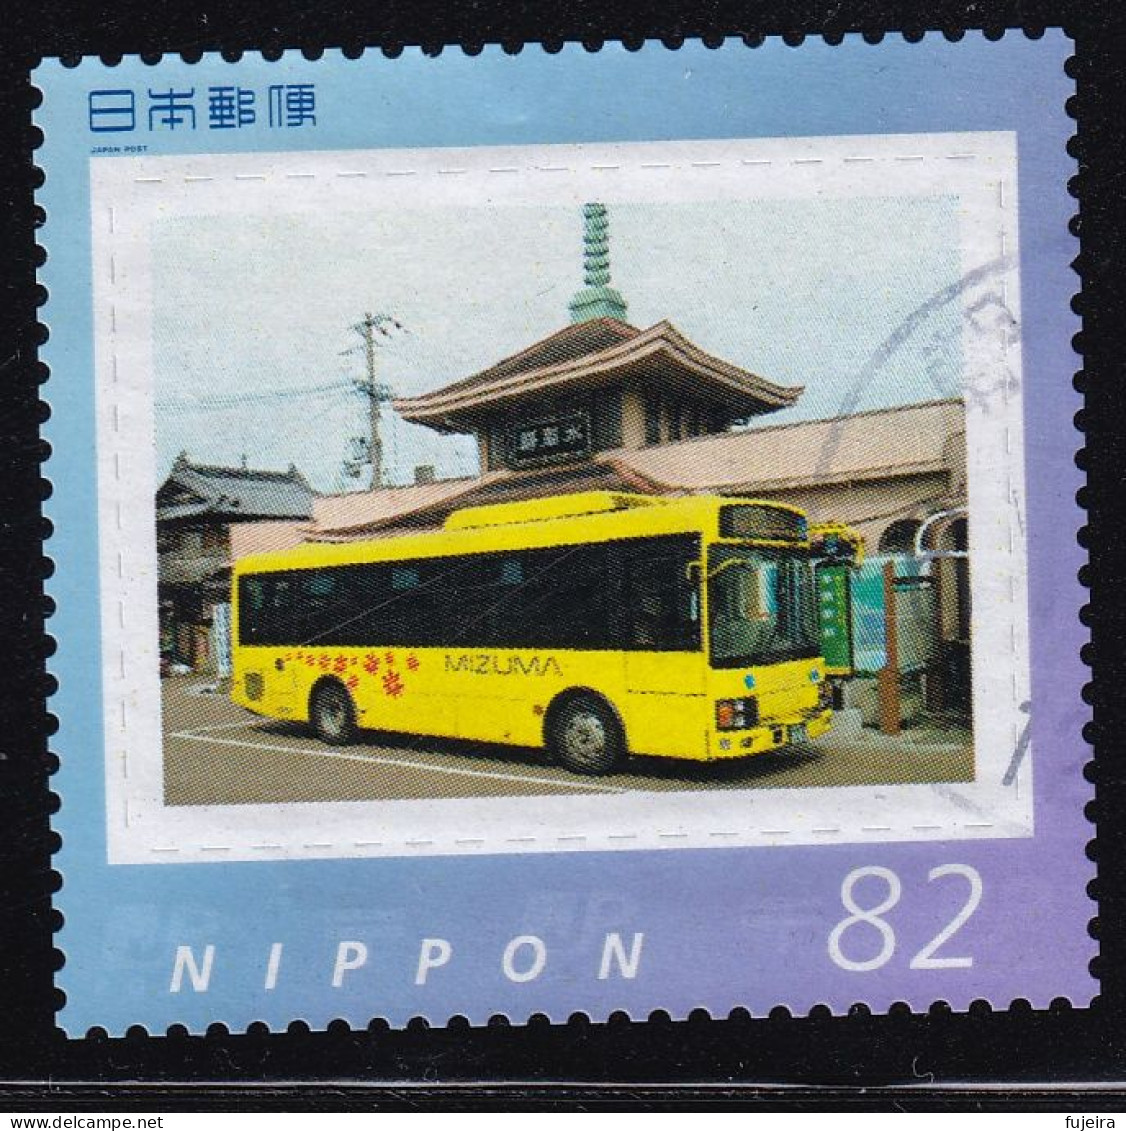 Japan Personalized Stamp, Bus (jpv9550) Used - Usati